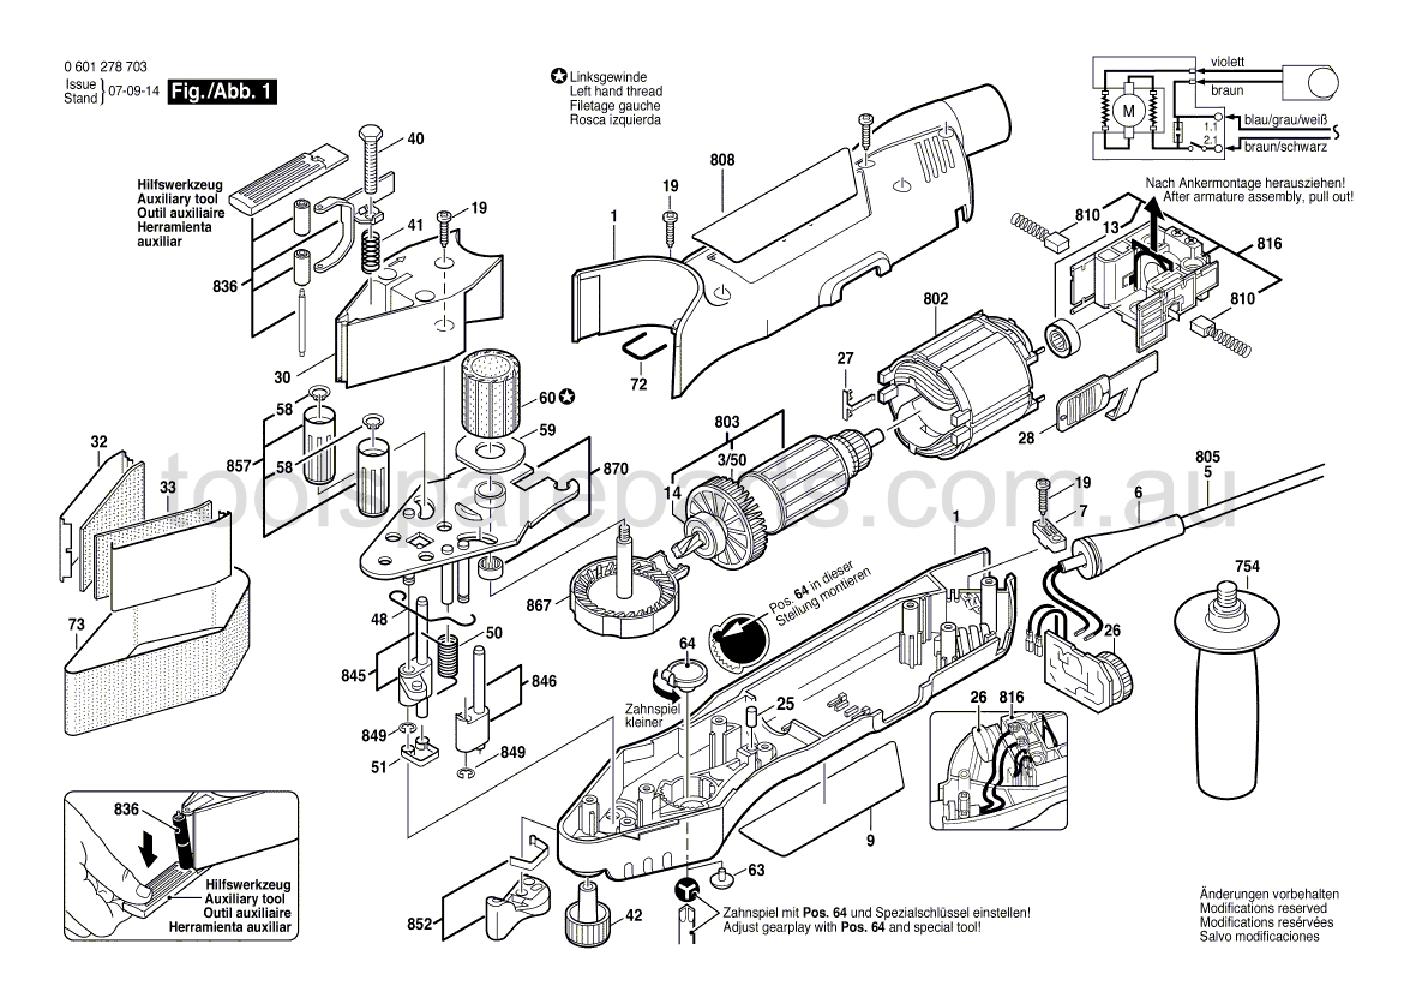 Bosch GVS 350 AE 0601278737  Diagram 1